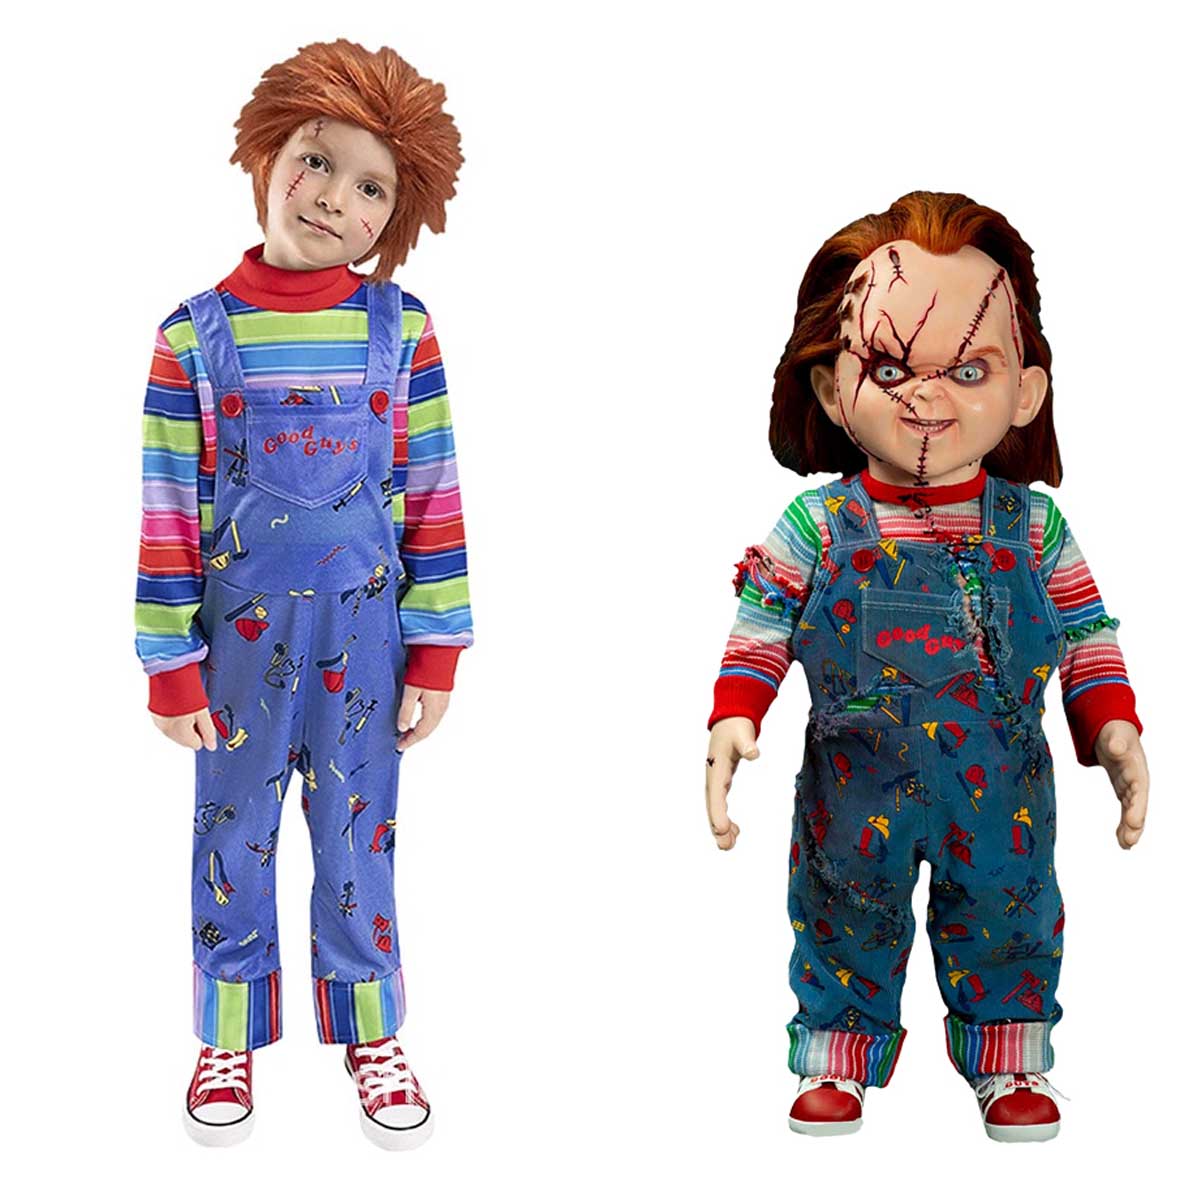 Hacer un nombre ratón o rata Misericordioso Buy Kids Chucky Costume l Chucky Halloween Costume for Kids